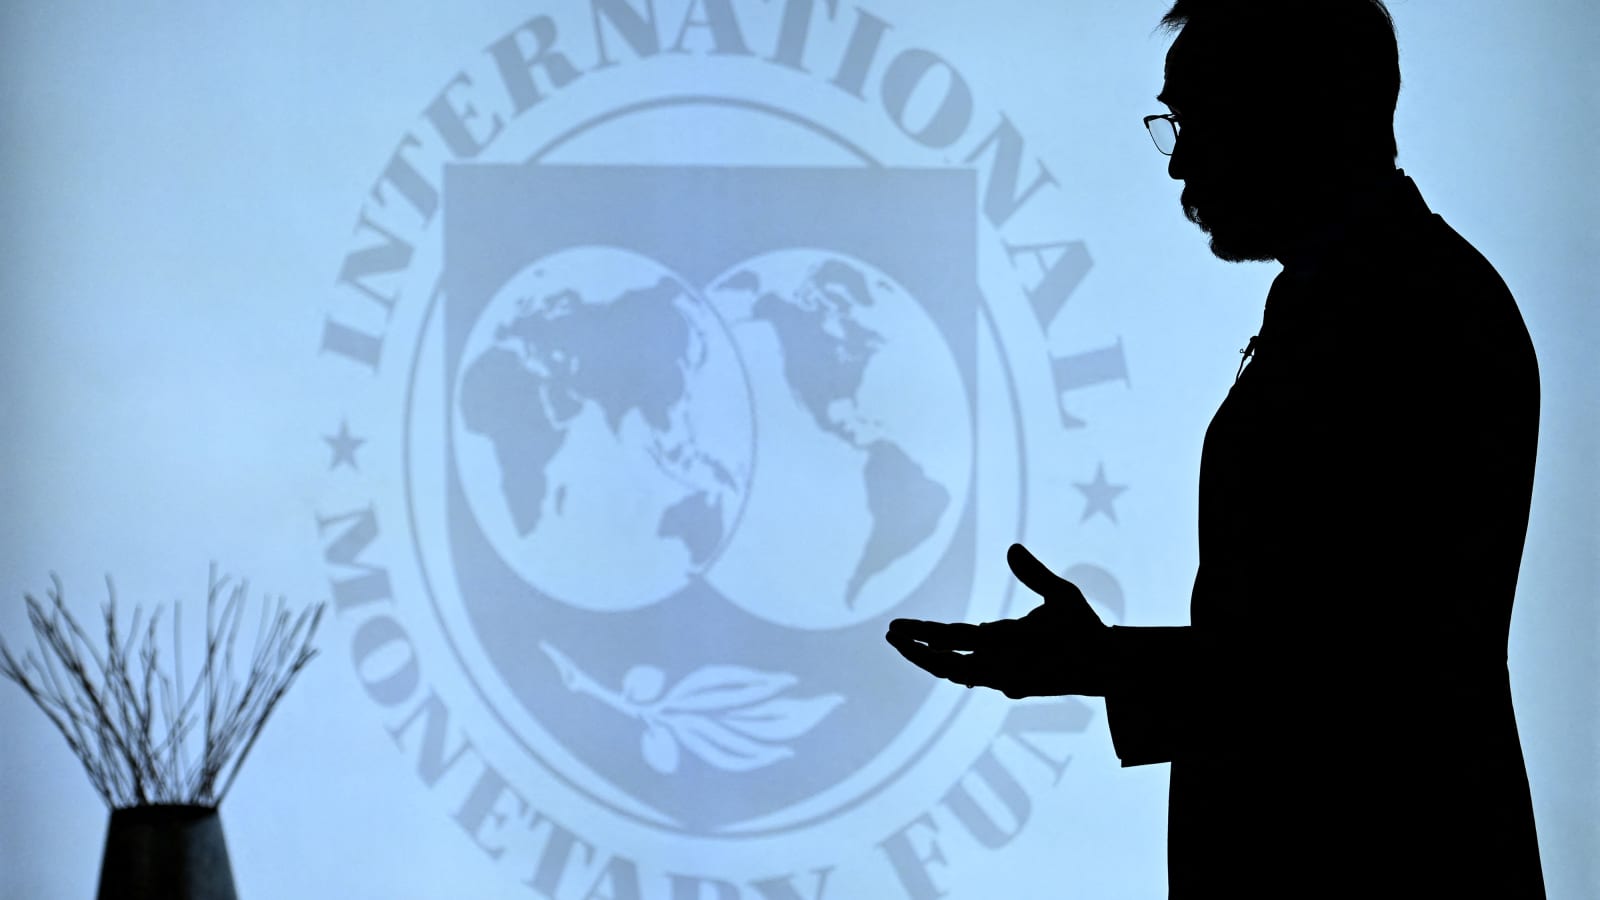 IMF: Tantangan Terbesar Ekonomi Asia adalah Meningkatnya Utang dan Pelarian Modal